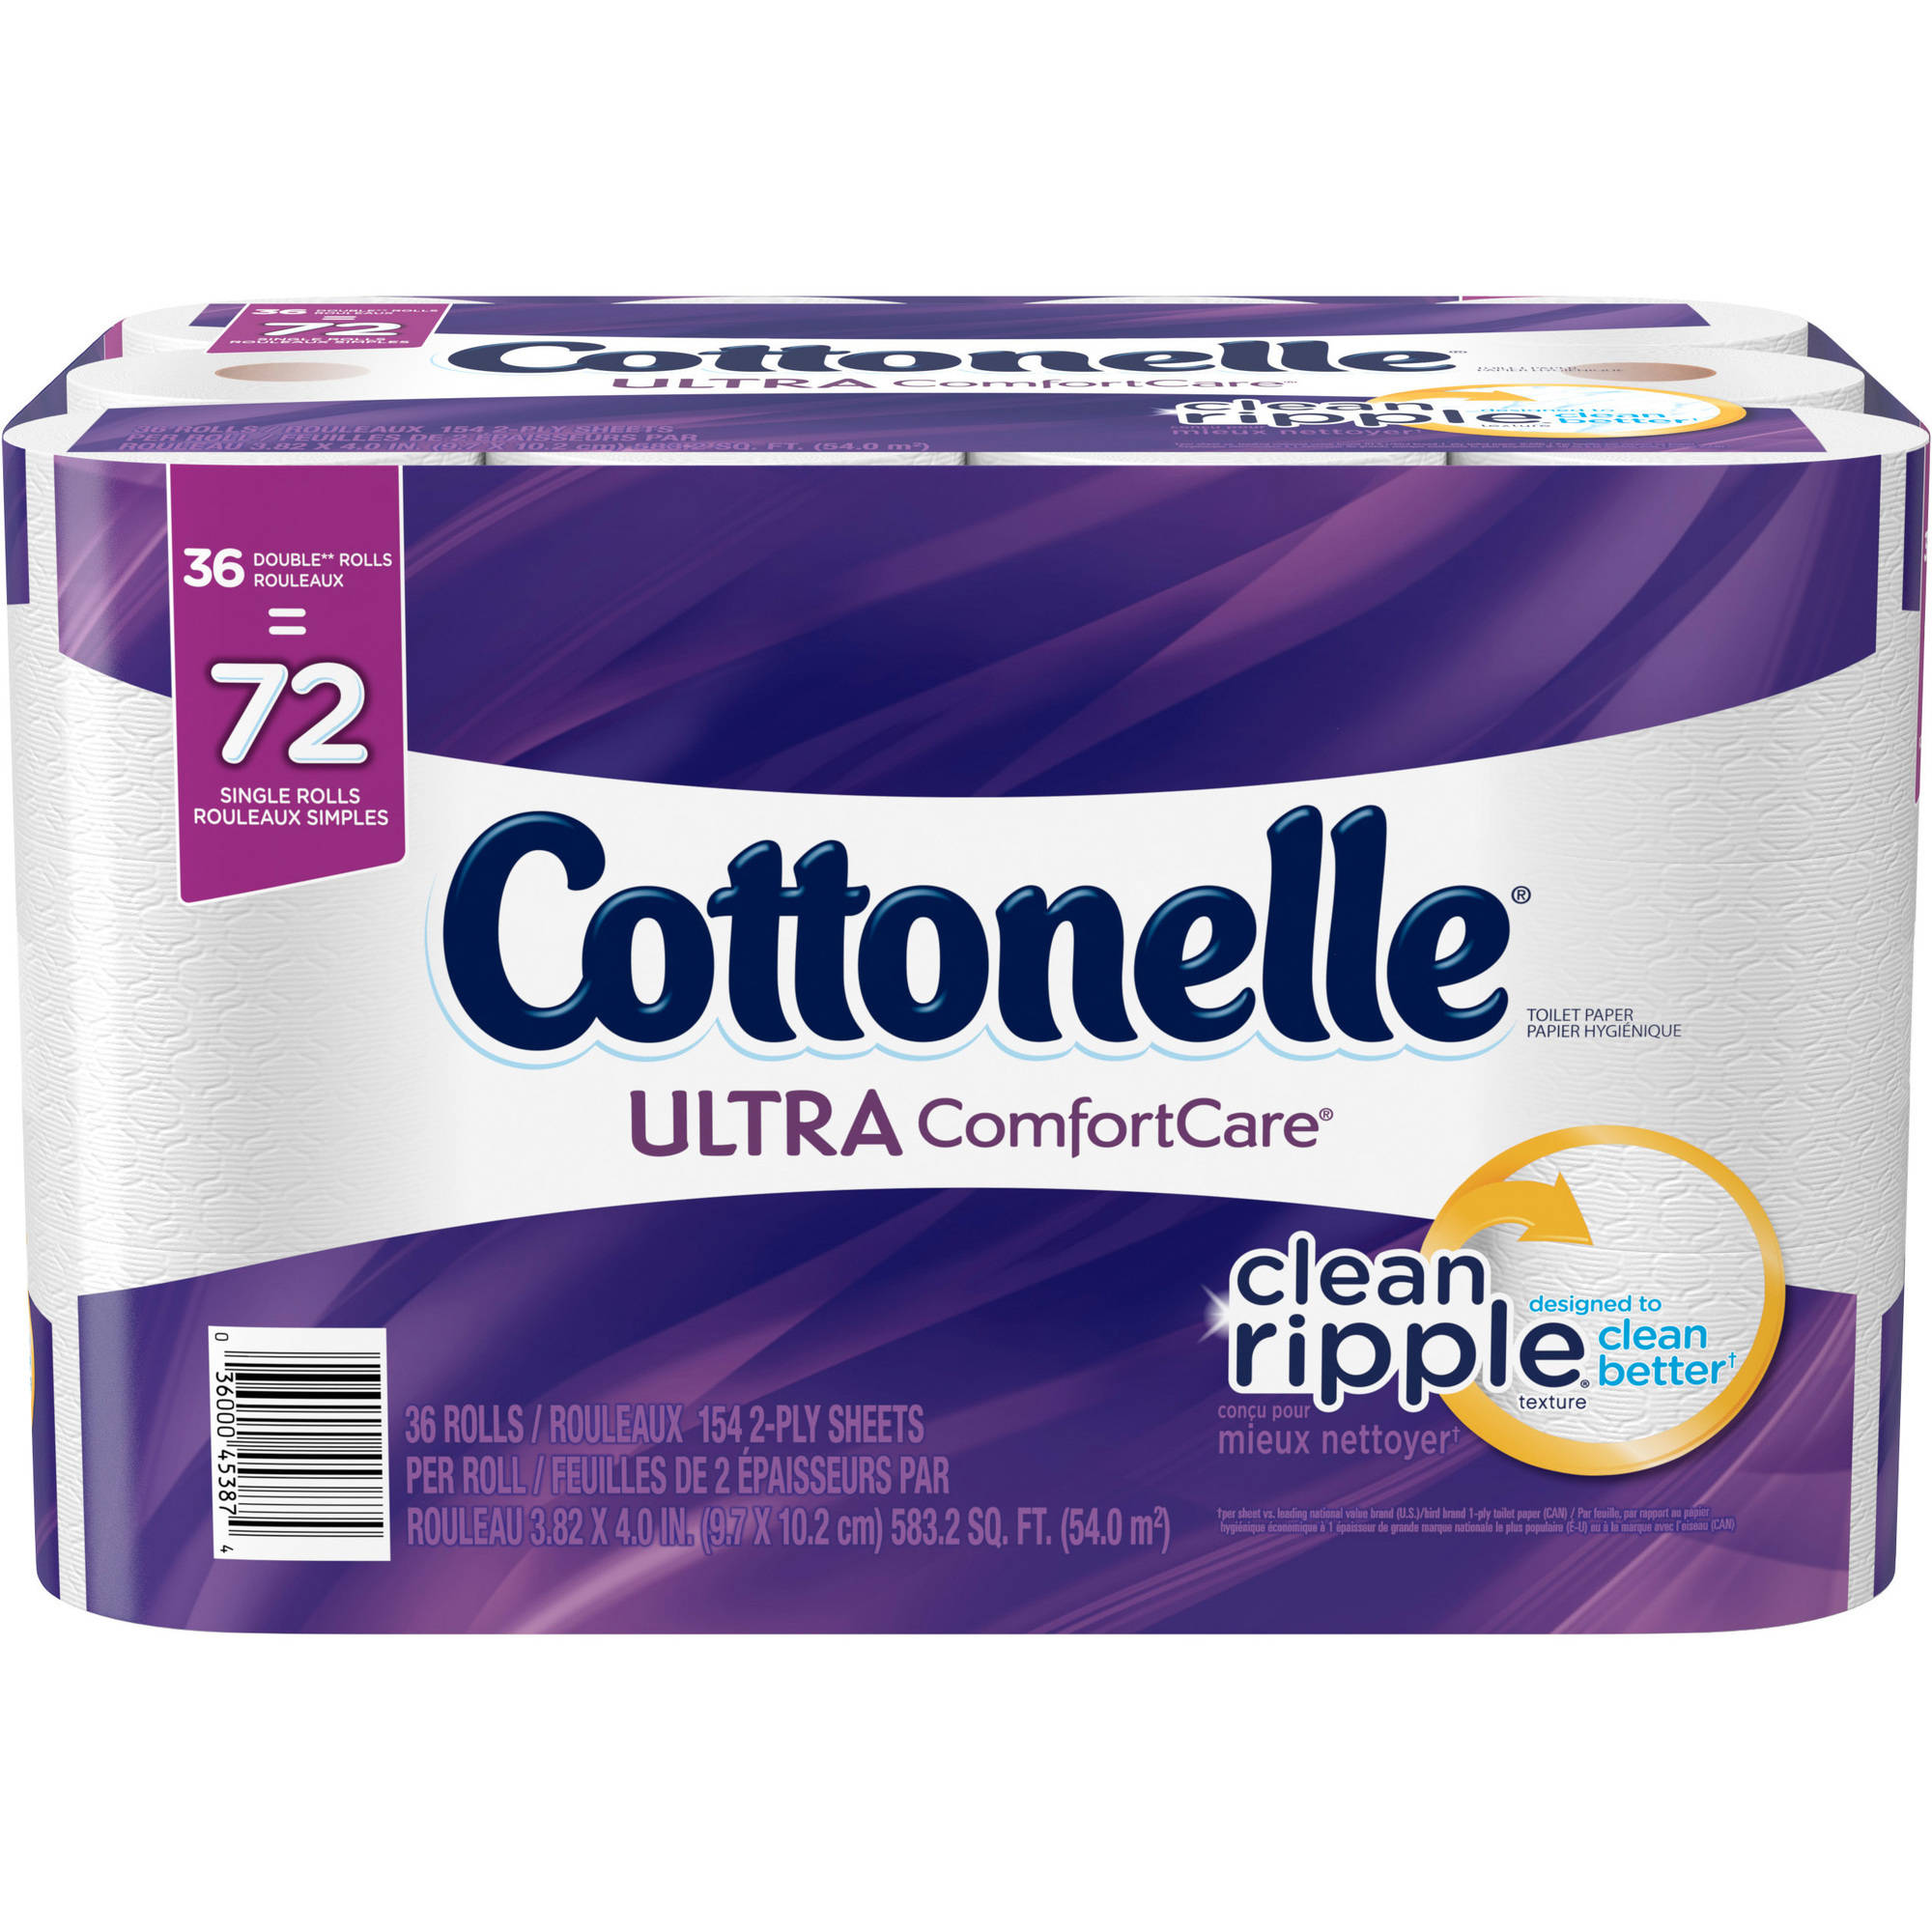 Cottonelle Ultra ComfortCare Toilet Paper, 36 Double Rolls - image 1 of 5